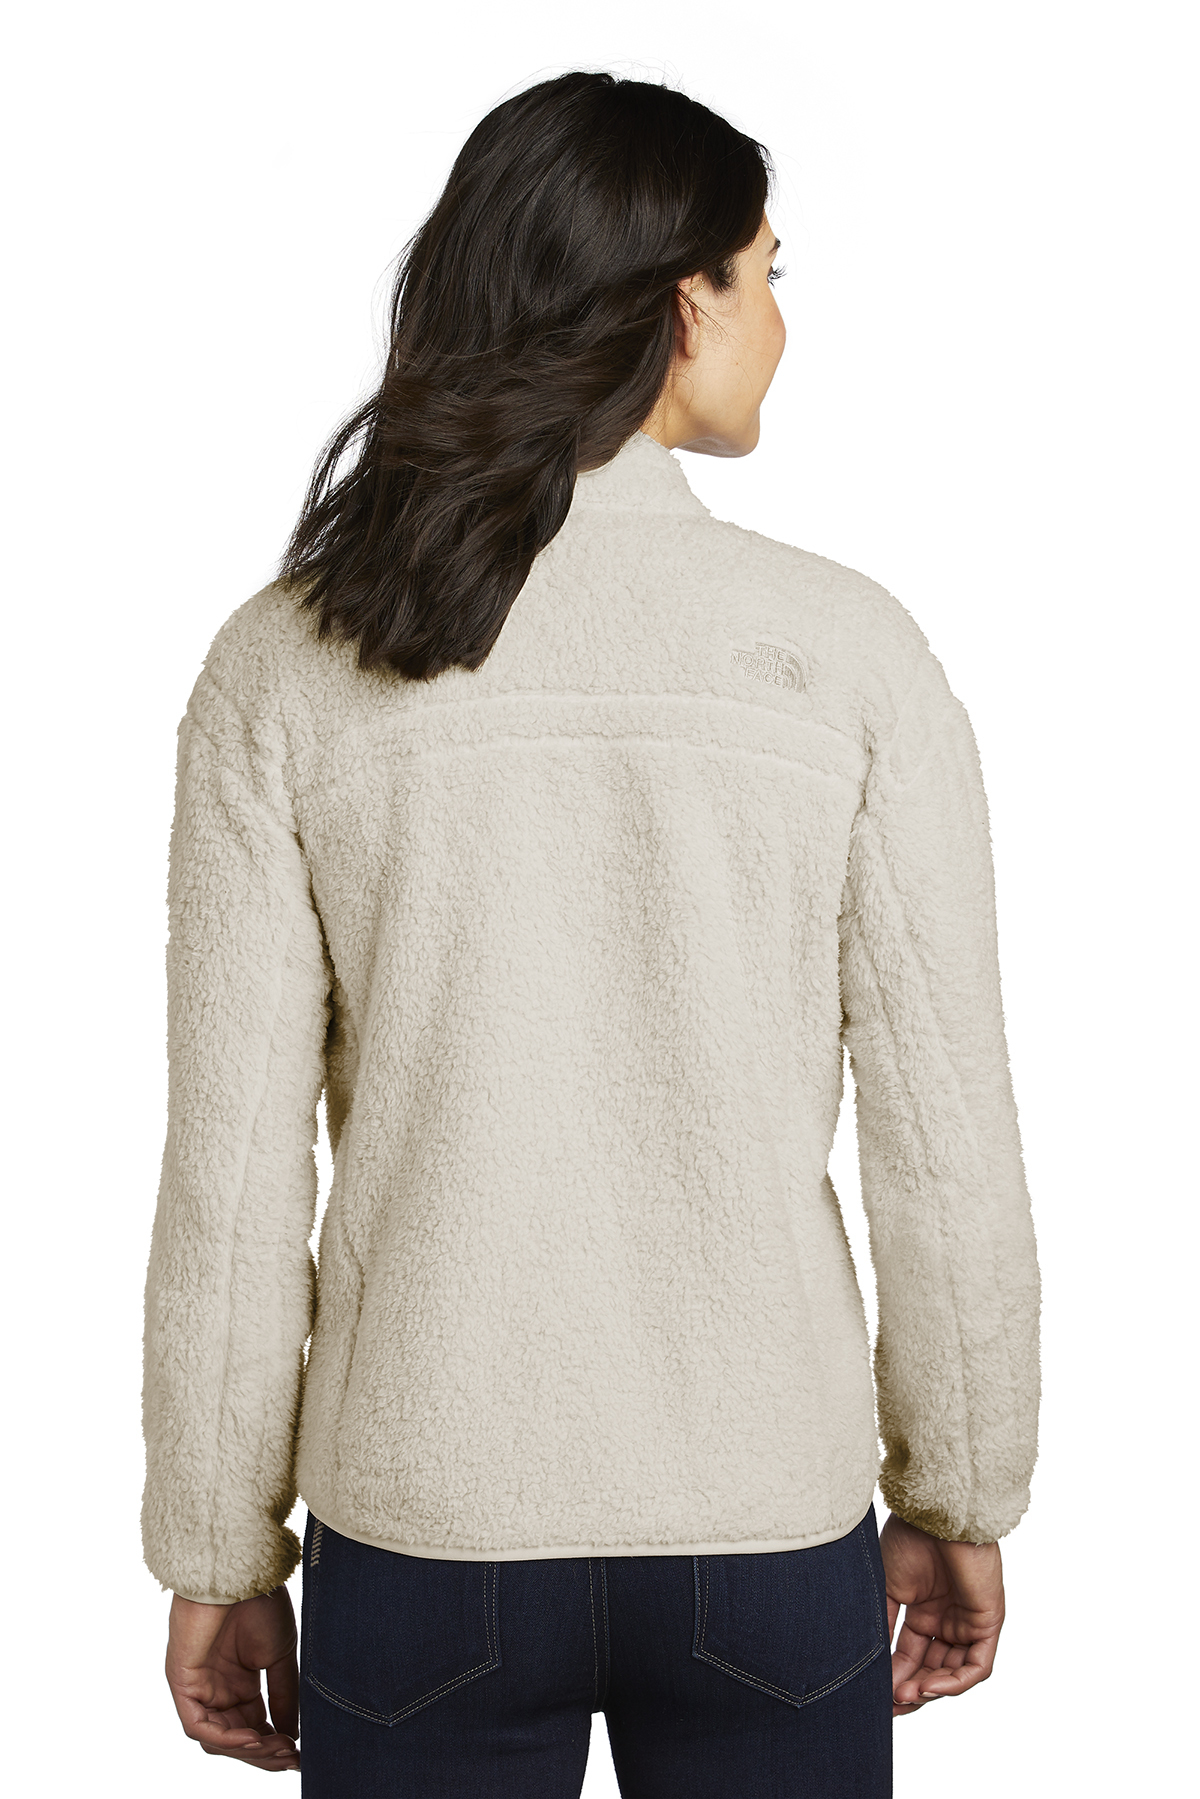 The North Face Ladies High Loft Fleece | Product | SanMar